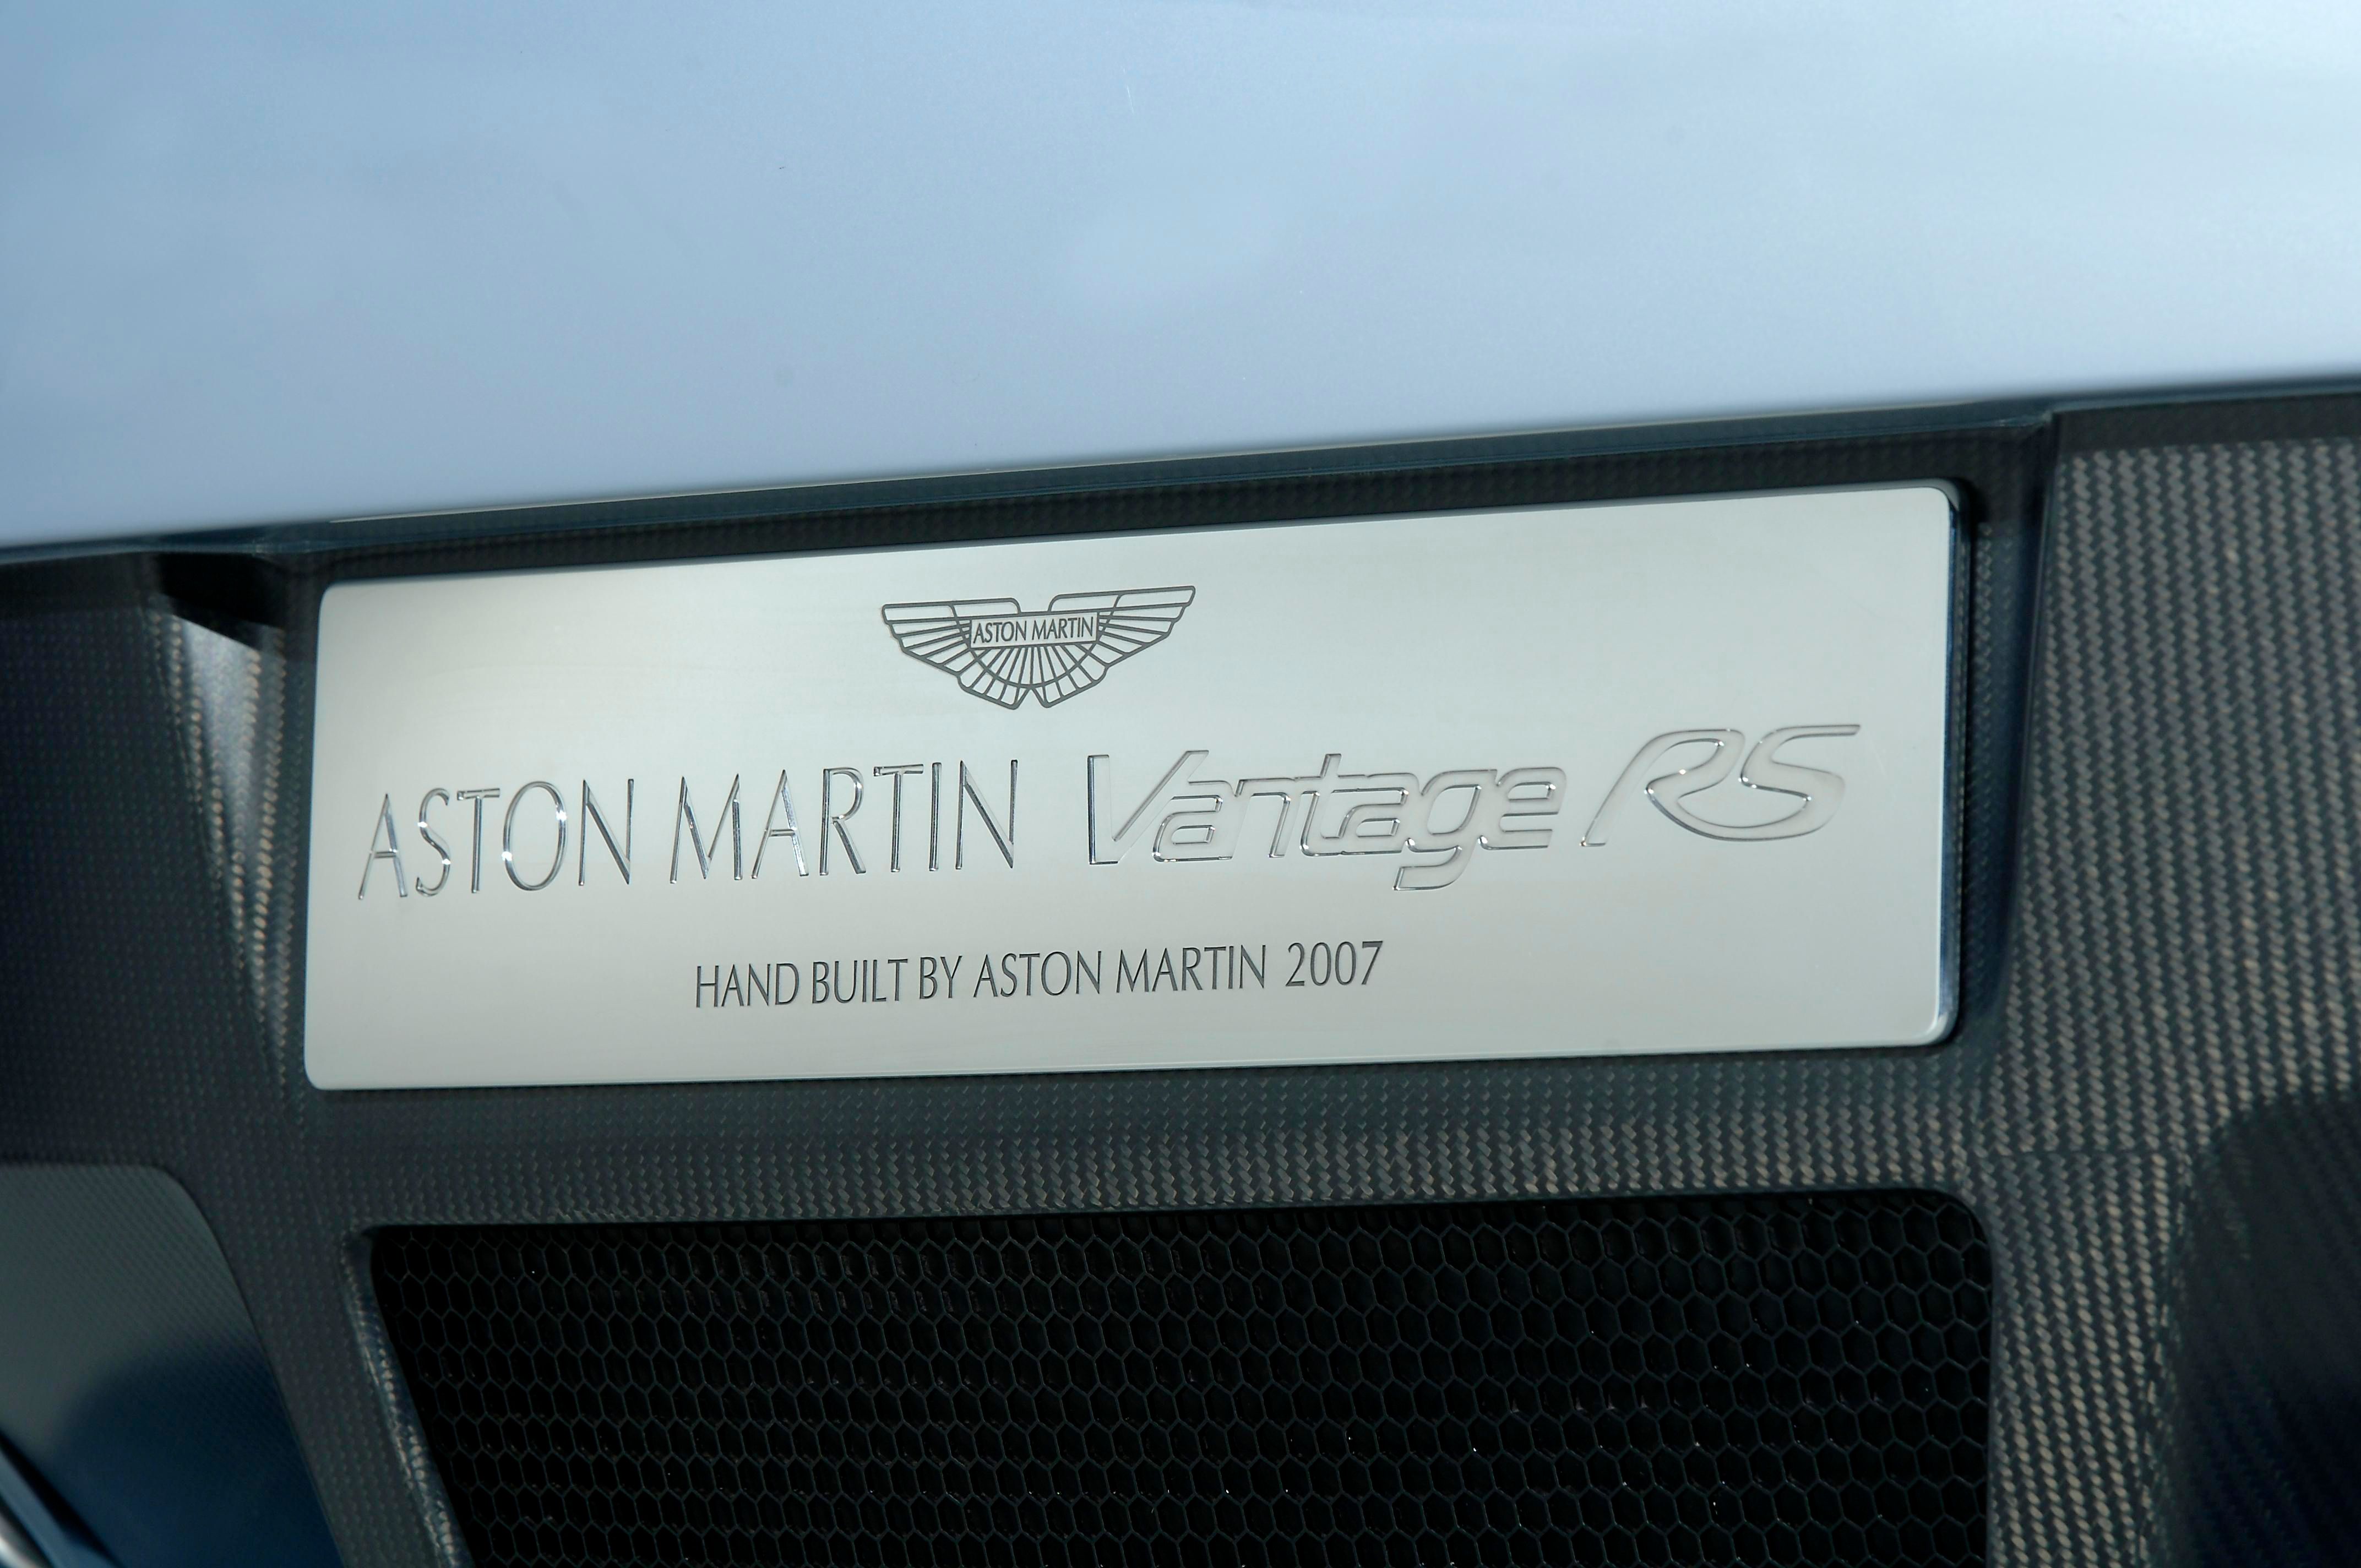 2008 Aston Martin V12 Vantage RS Concept